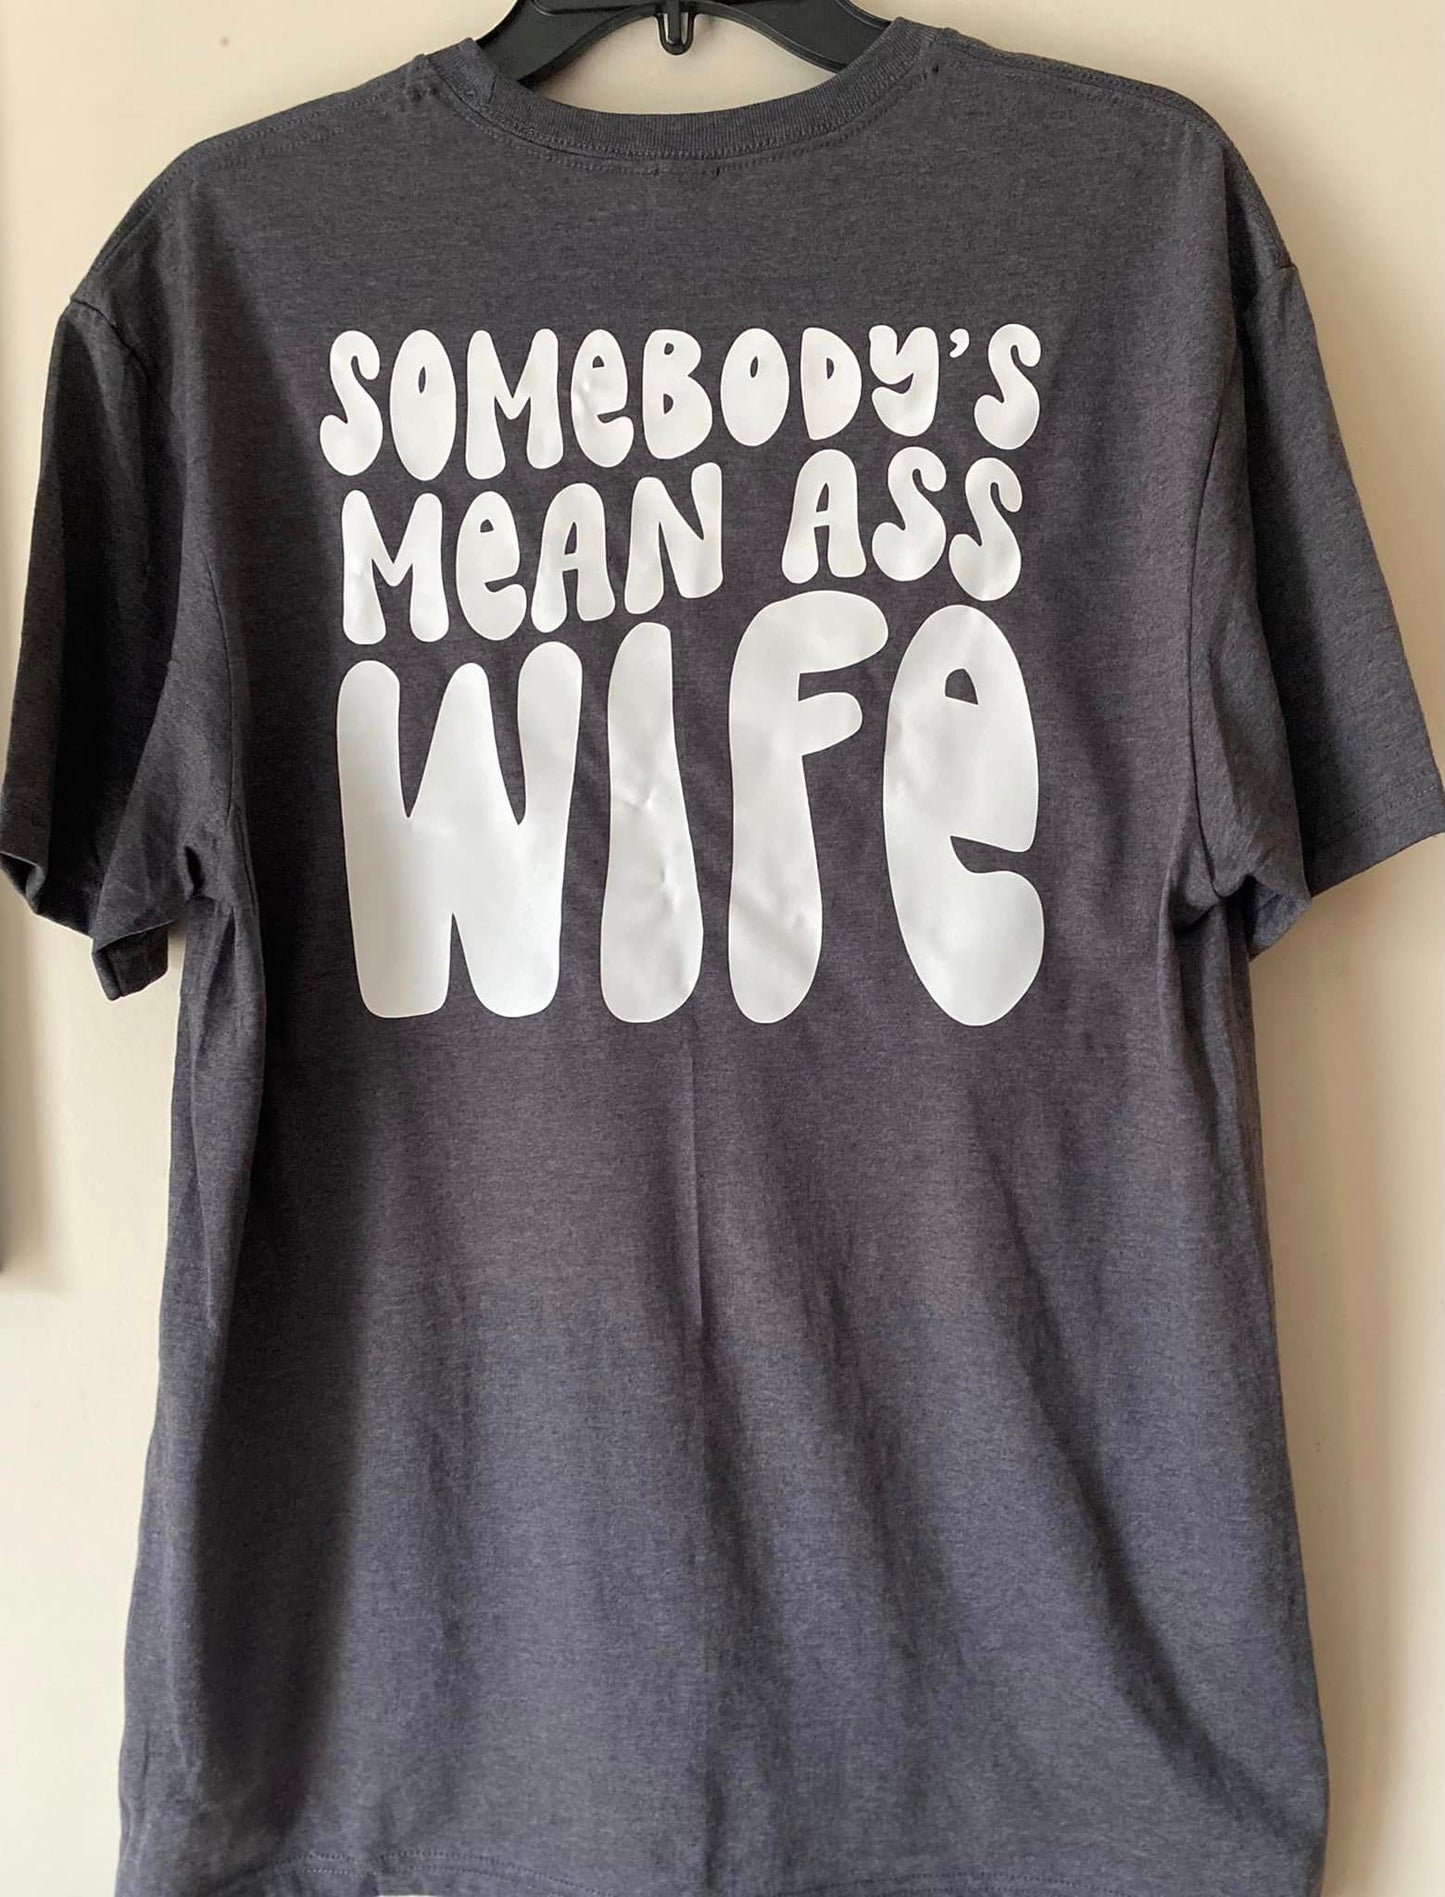 Mean Ass Wife tee